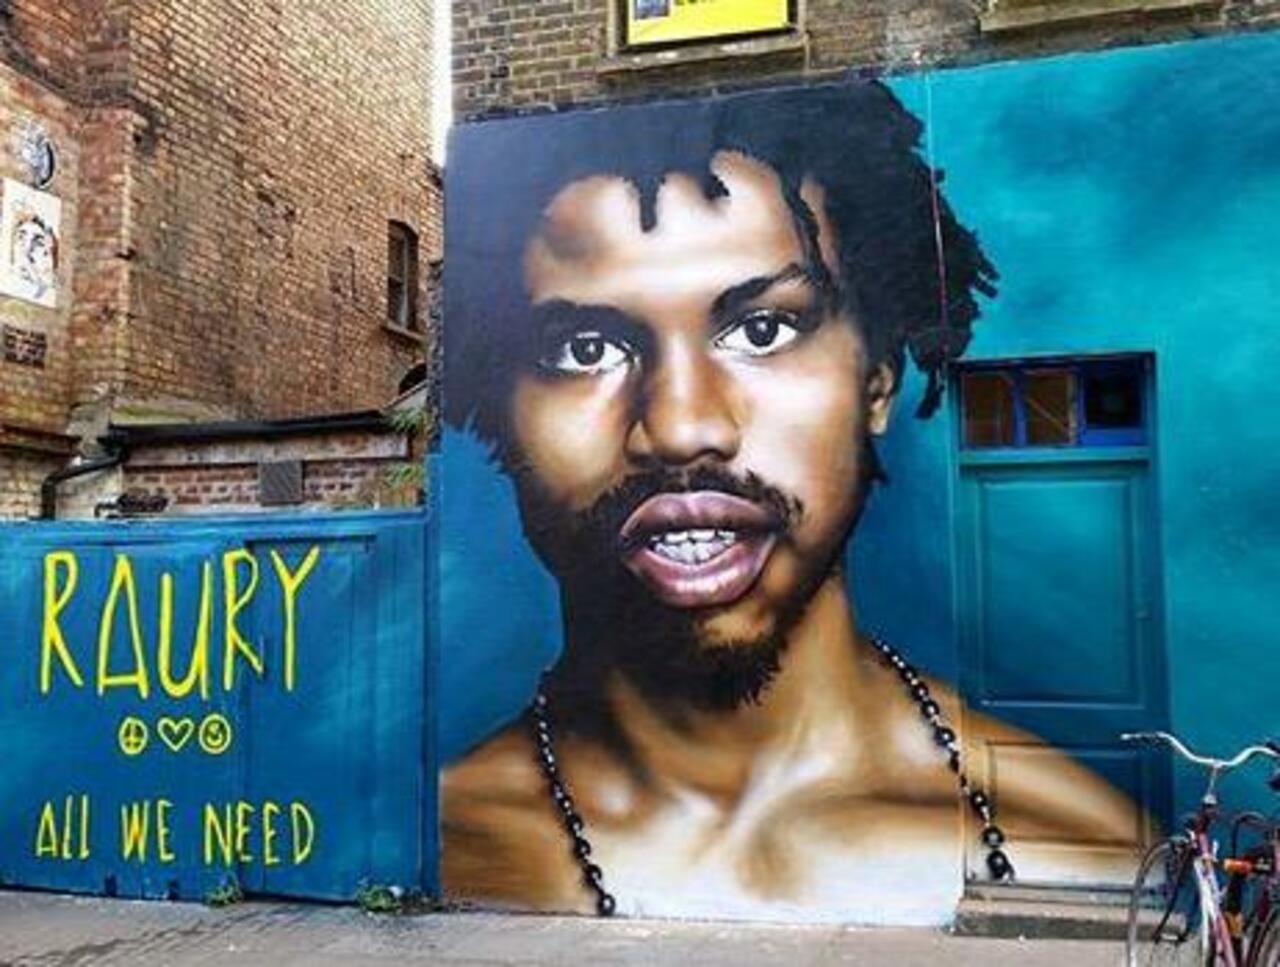 New Street Art of Raury by Olliver Switch in Brick Lane 

#art #graffiti #mural #streetart http://t.co/qgh1K6J0FU